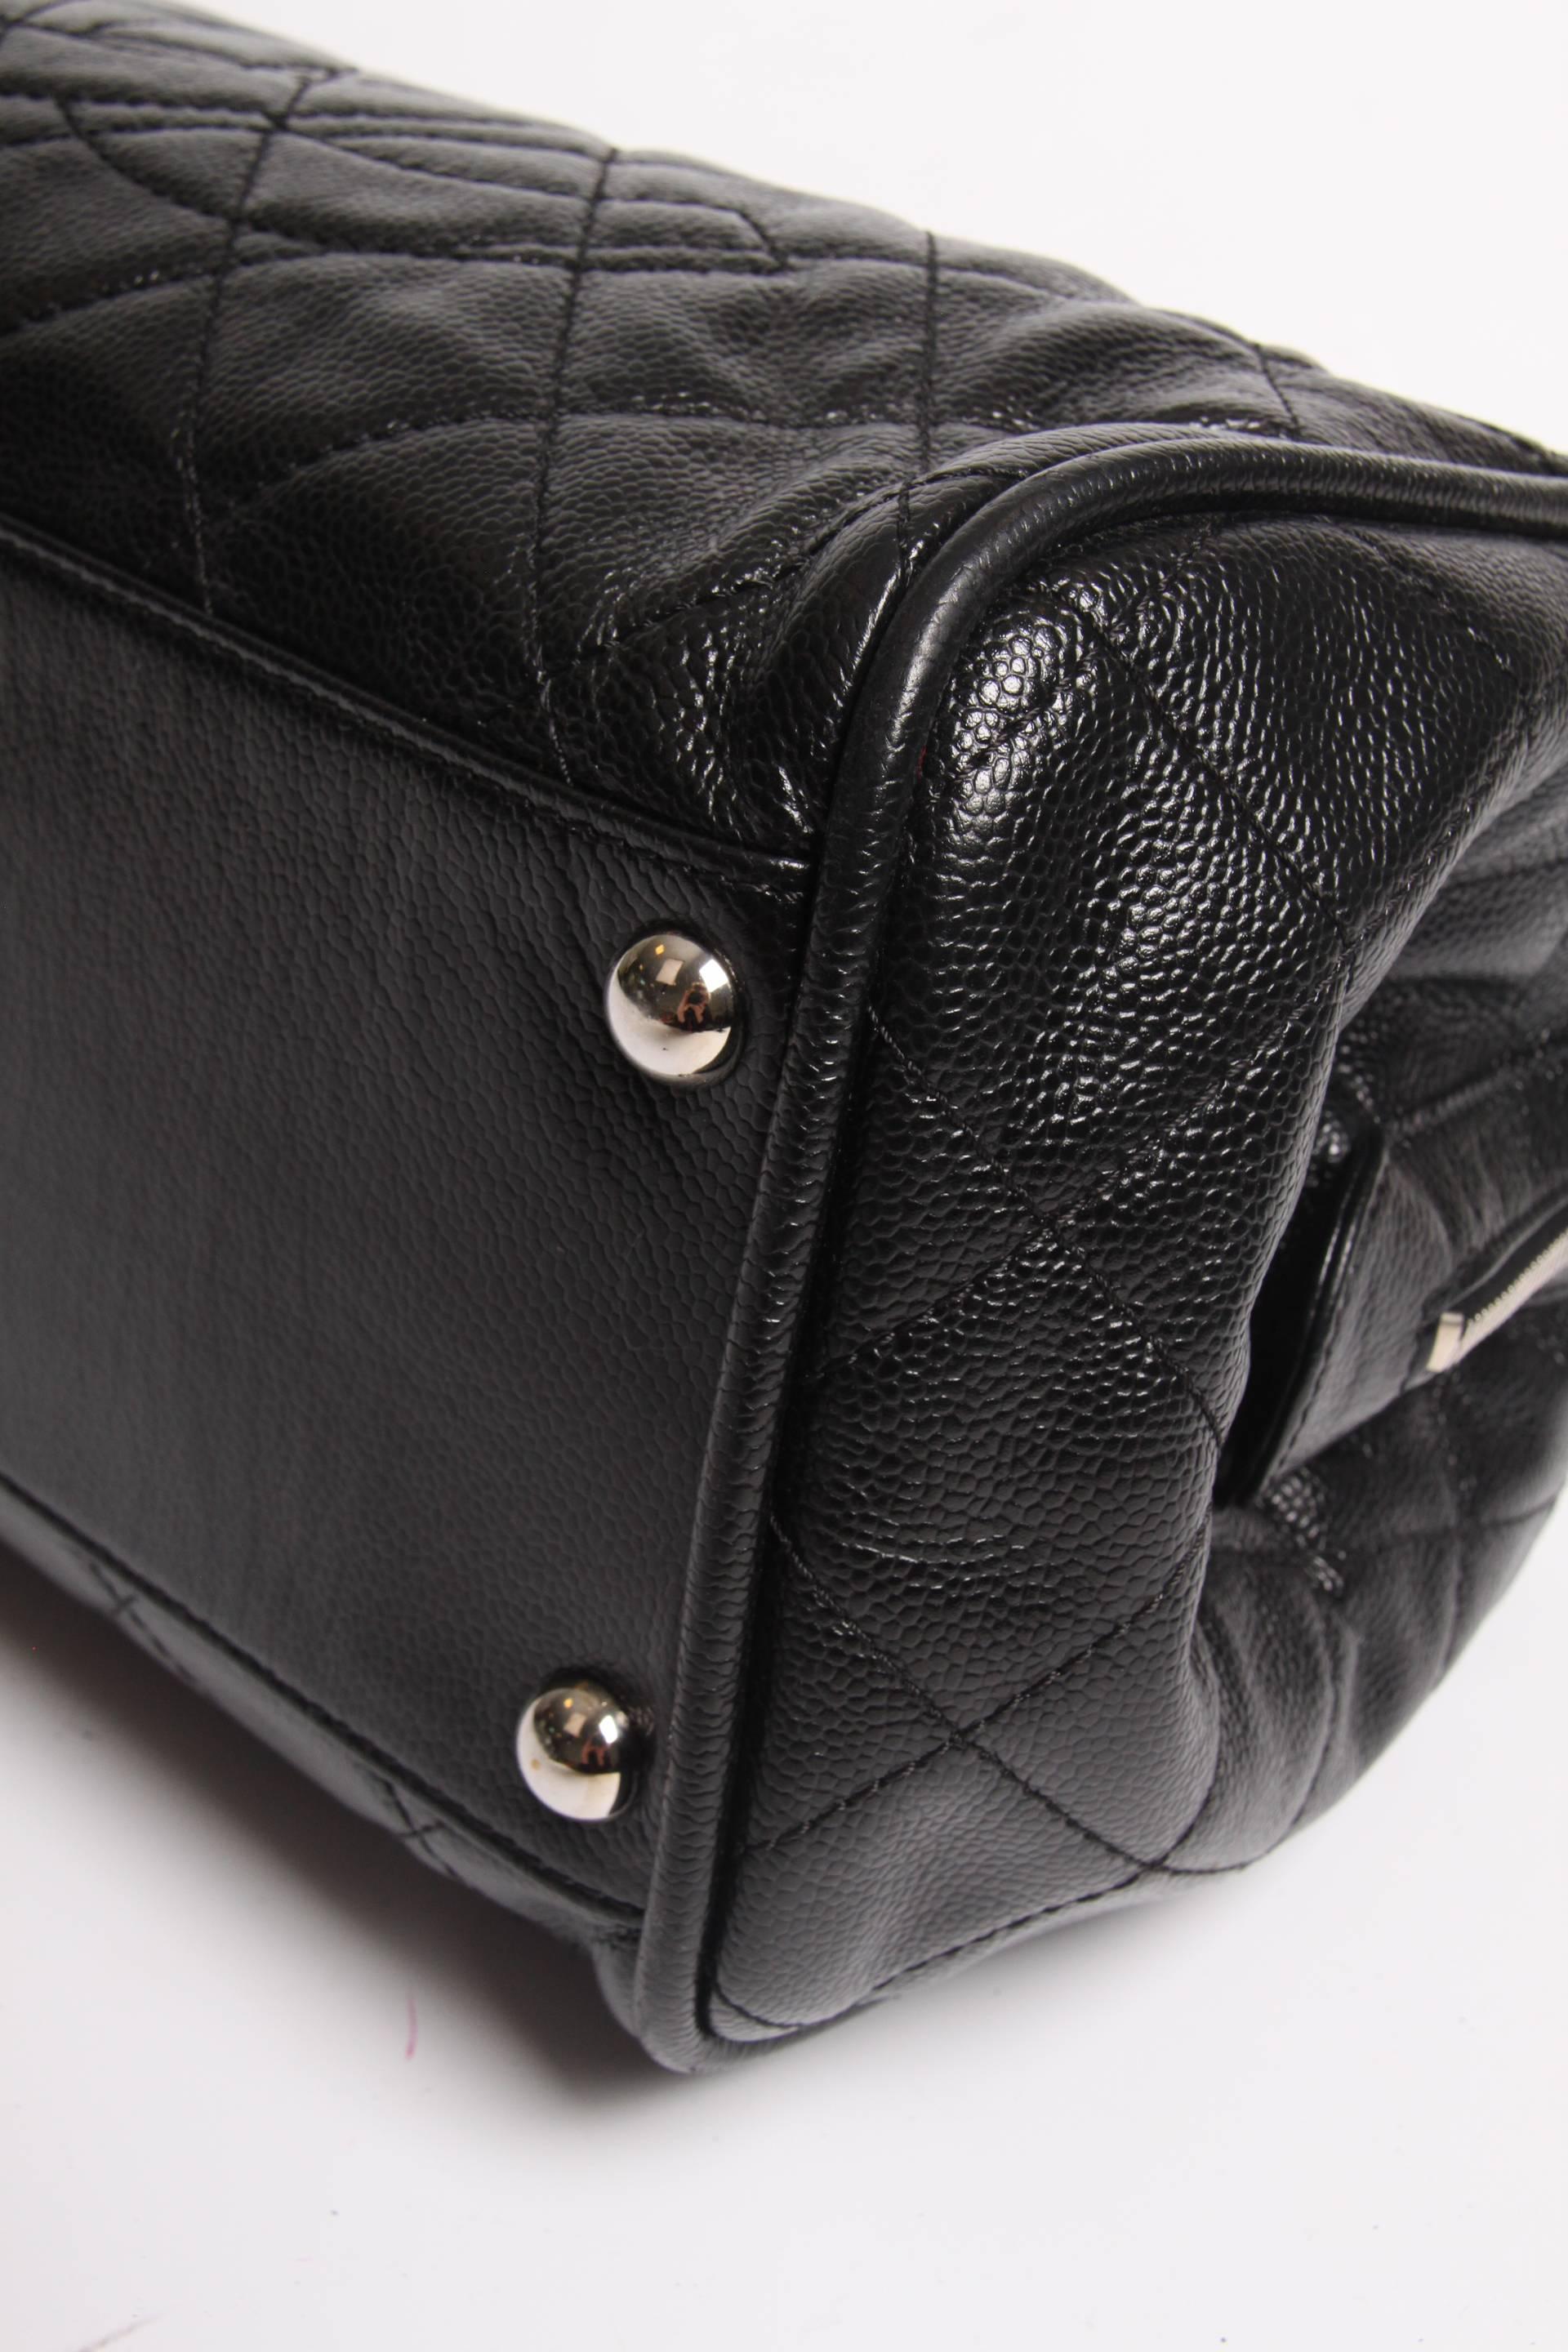 Women's Chanel Top Handle Shopper Bag - black caviar leather  For Sale